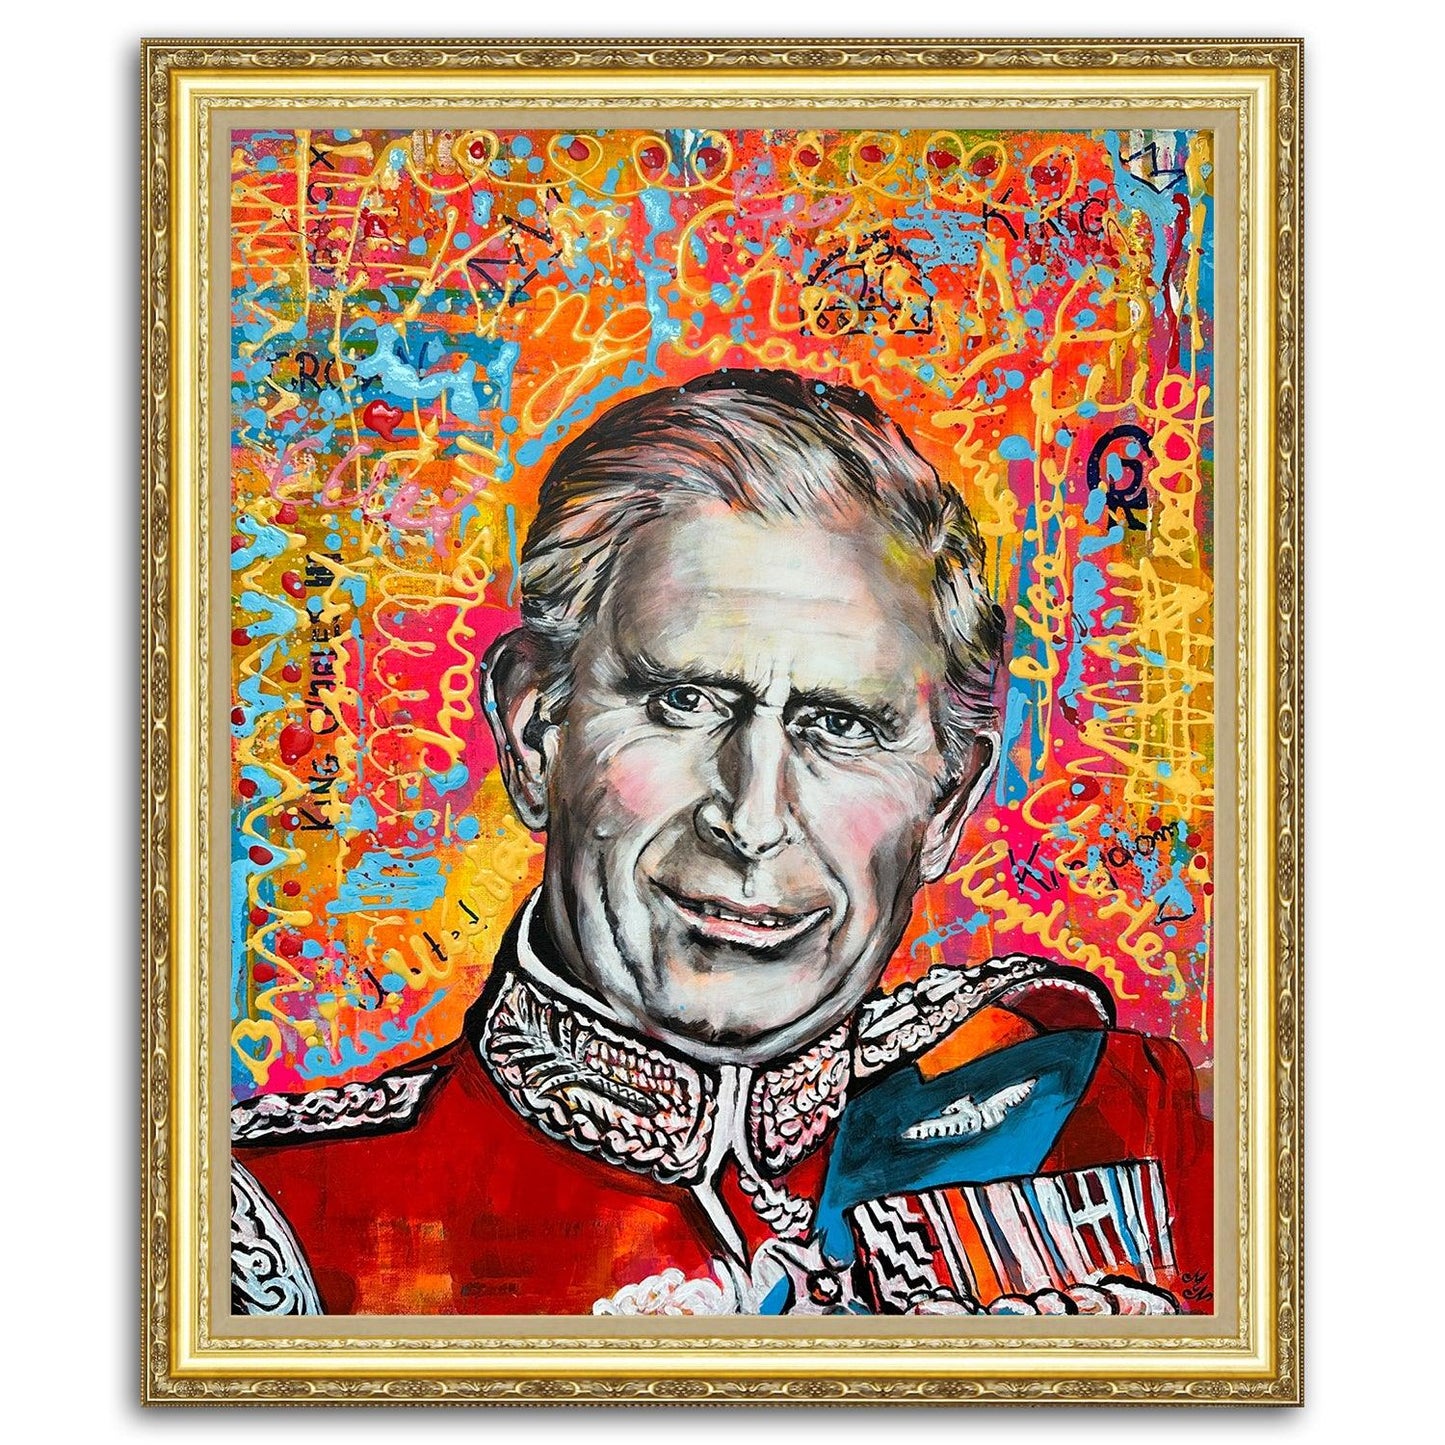 King Charles III - Pop Art Original Modern Portrait Painting Art on Canvas - ArtCursor